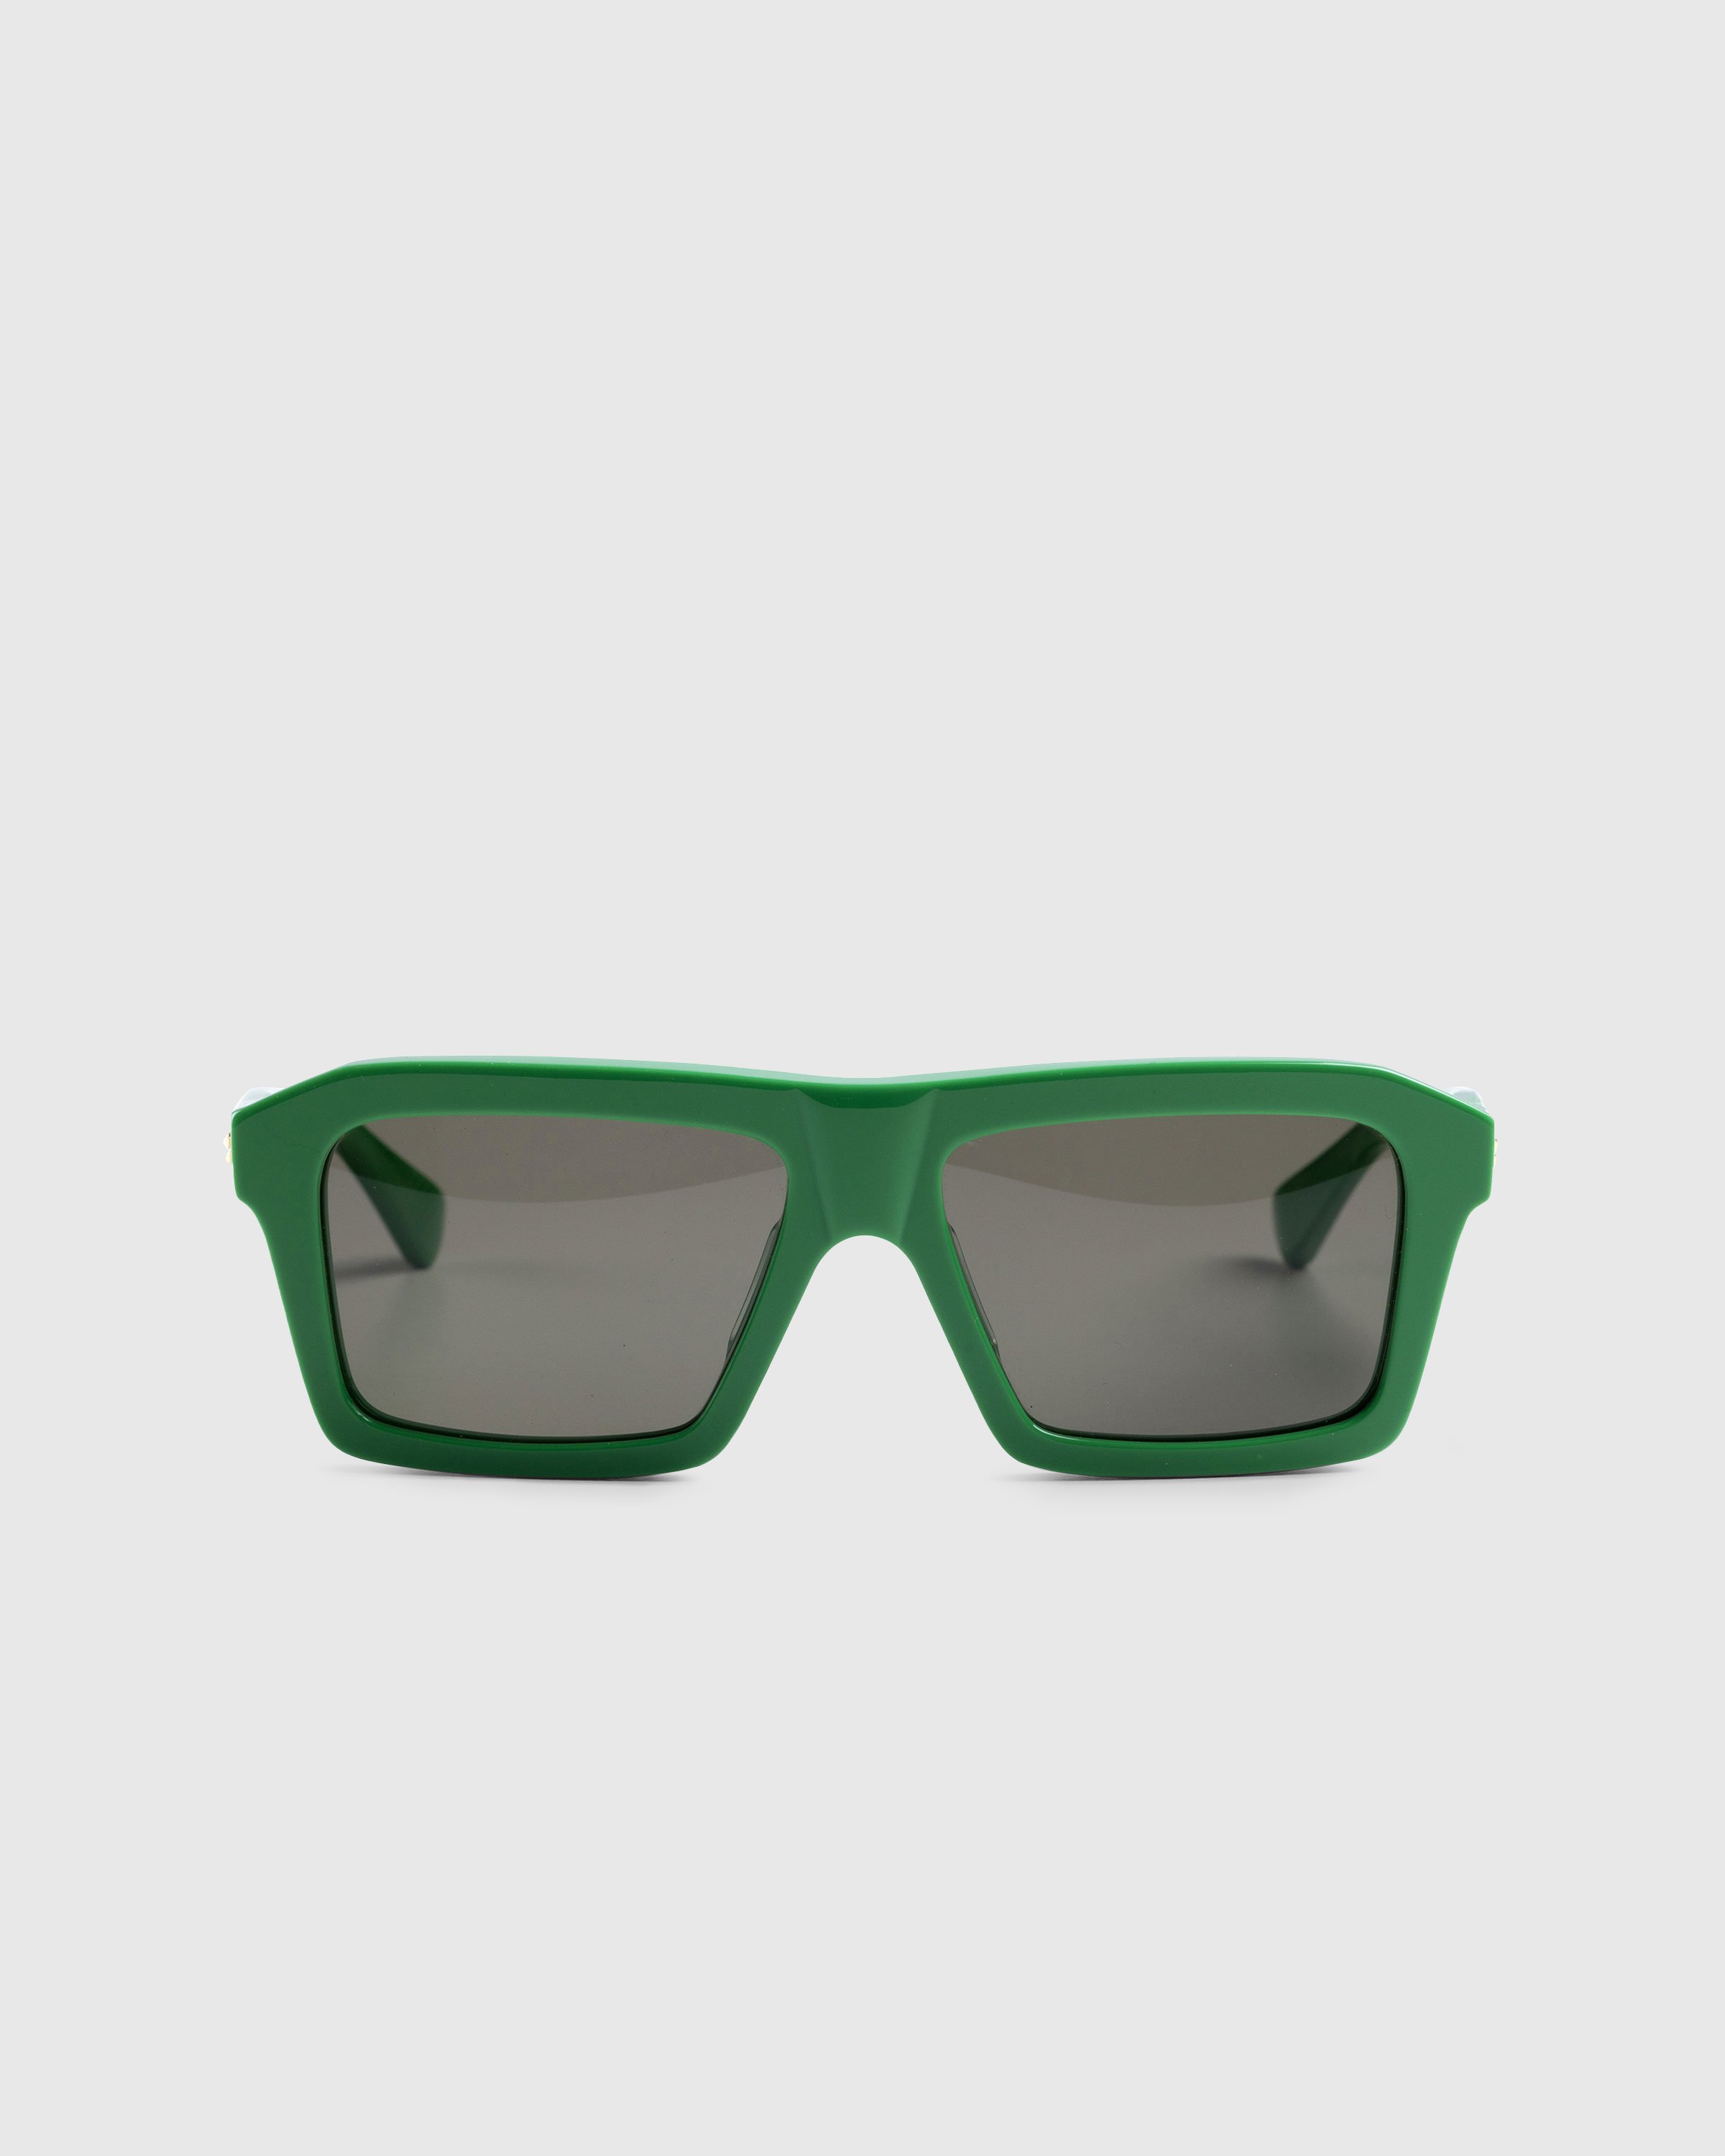 Bottega Veneta - Classic Square Sunglasses Green/Green - Accessories - Green - Image 1